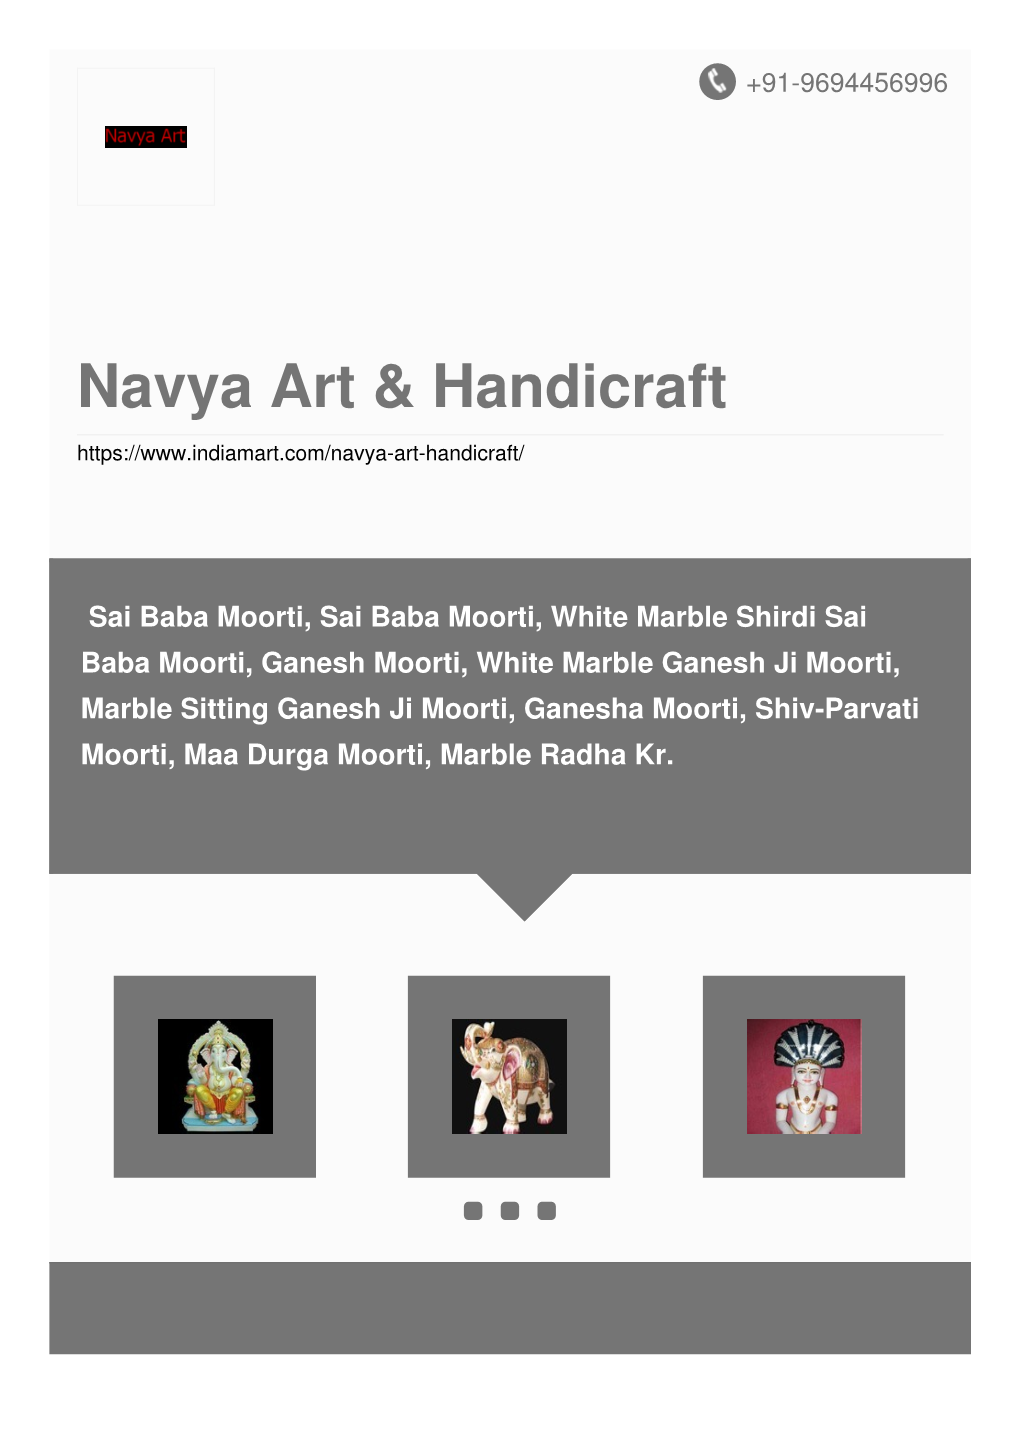 Navya Art & Handicraft